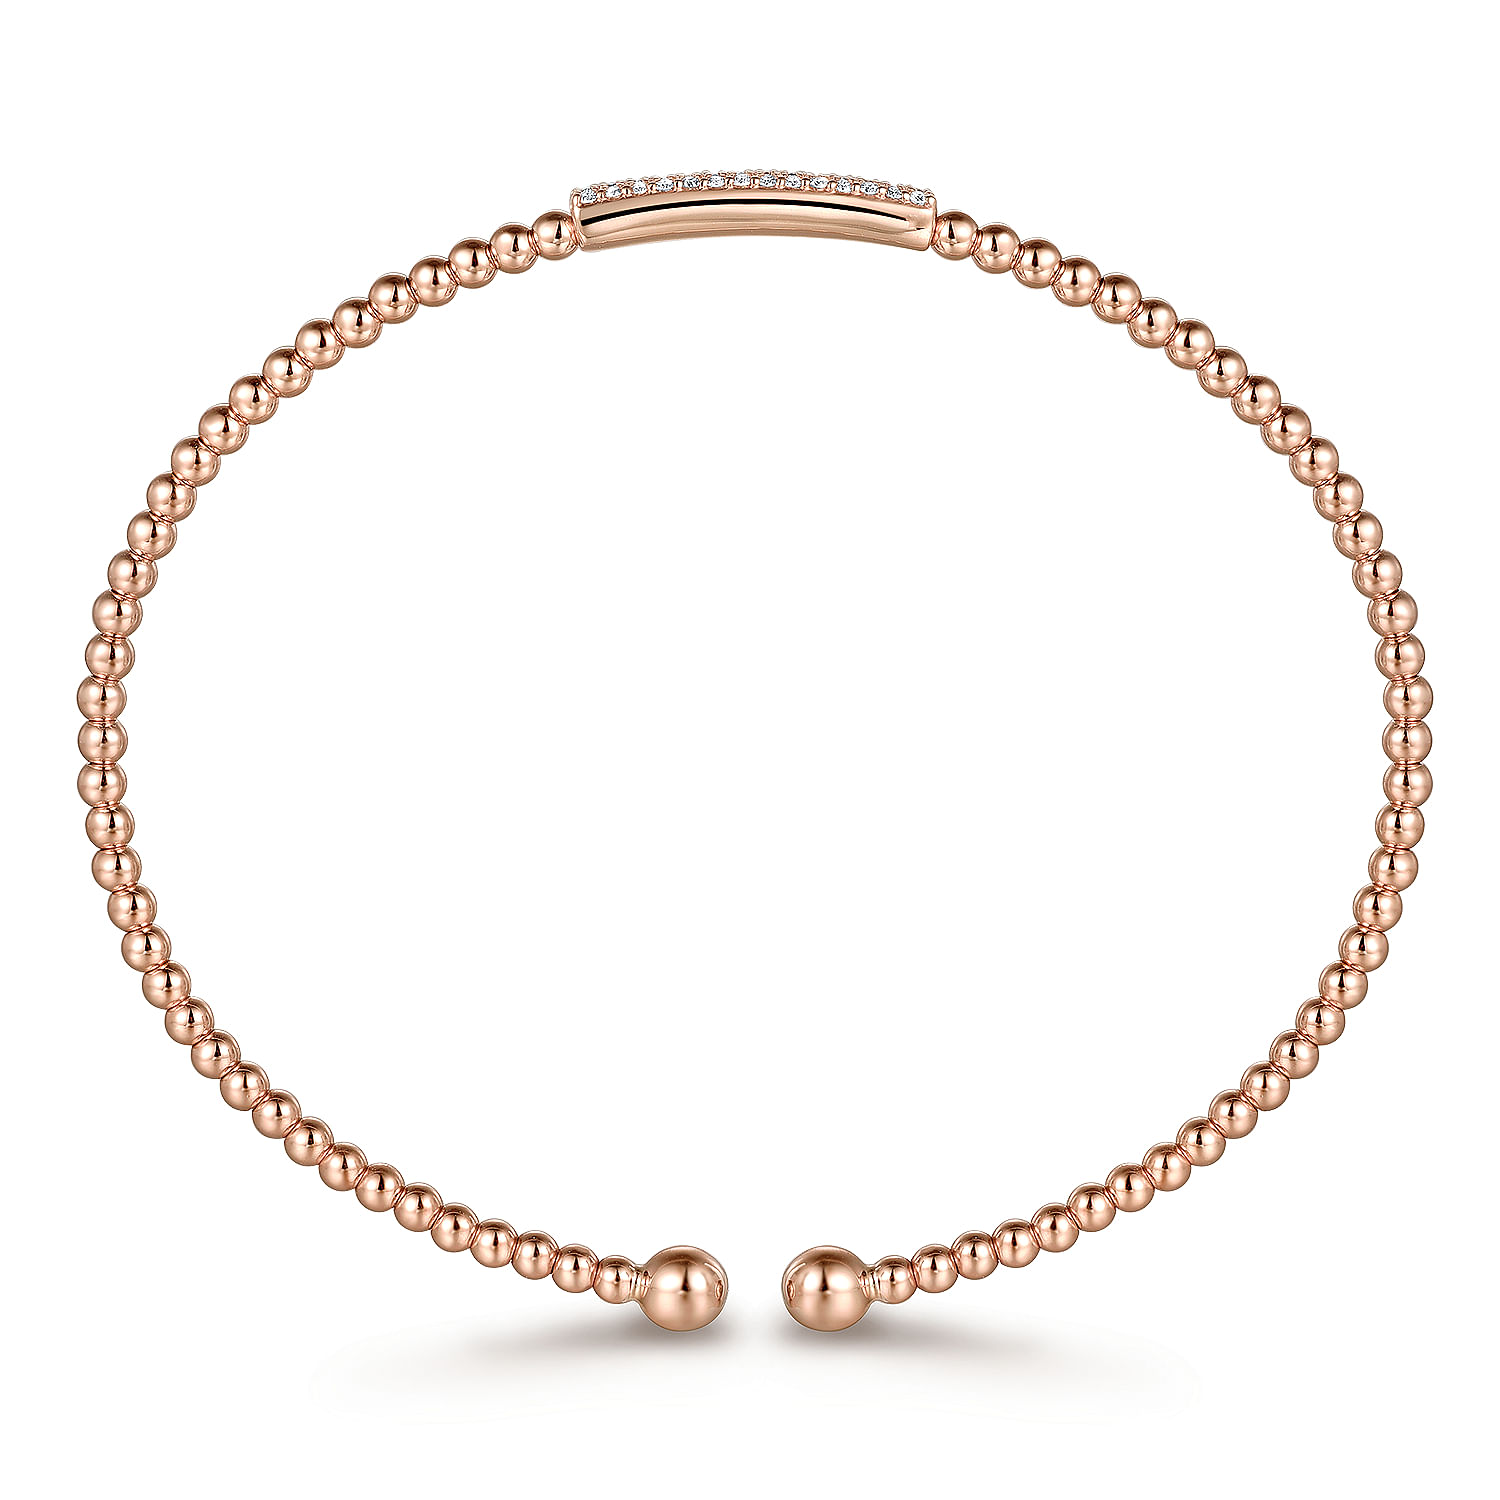 14K Rose Gold Bujukan Cuff Bracelet with Diamonds in size 6.25